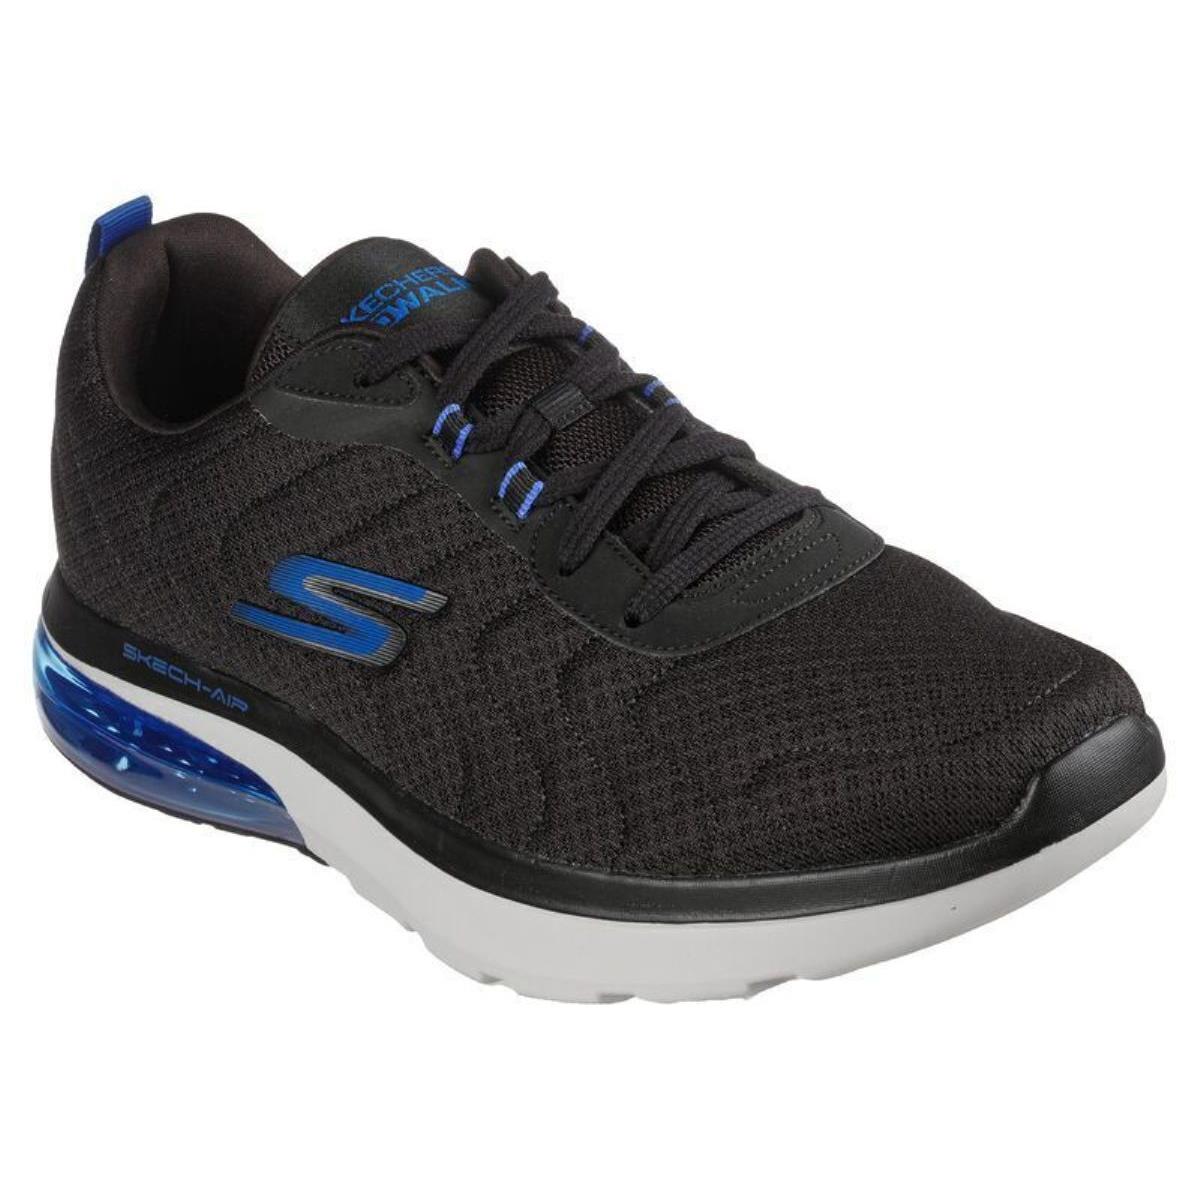 Man Skechers Go Walk Air 2.0 Trainers Lace Up Shoe 216154 Black/blue